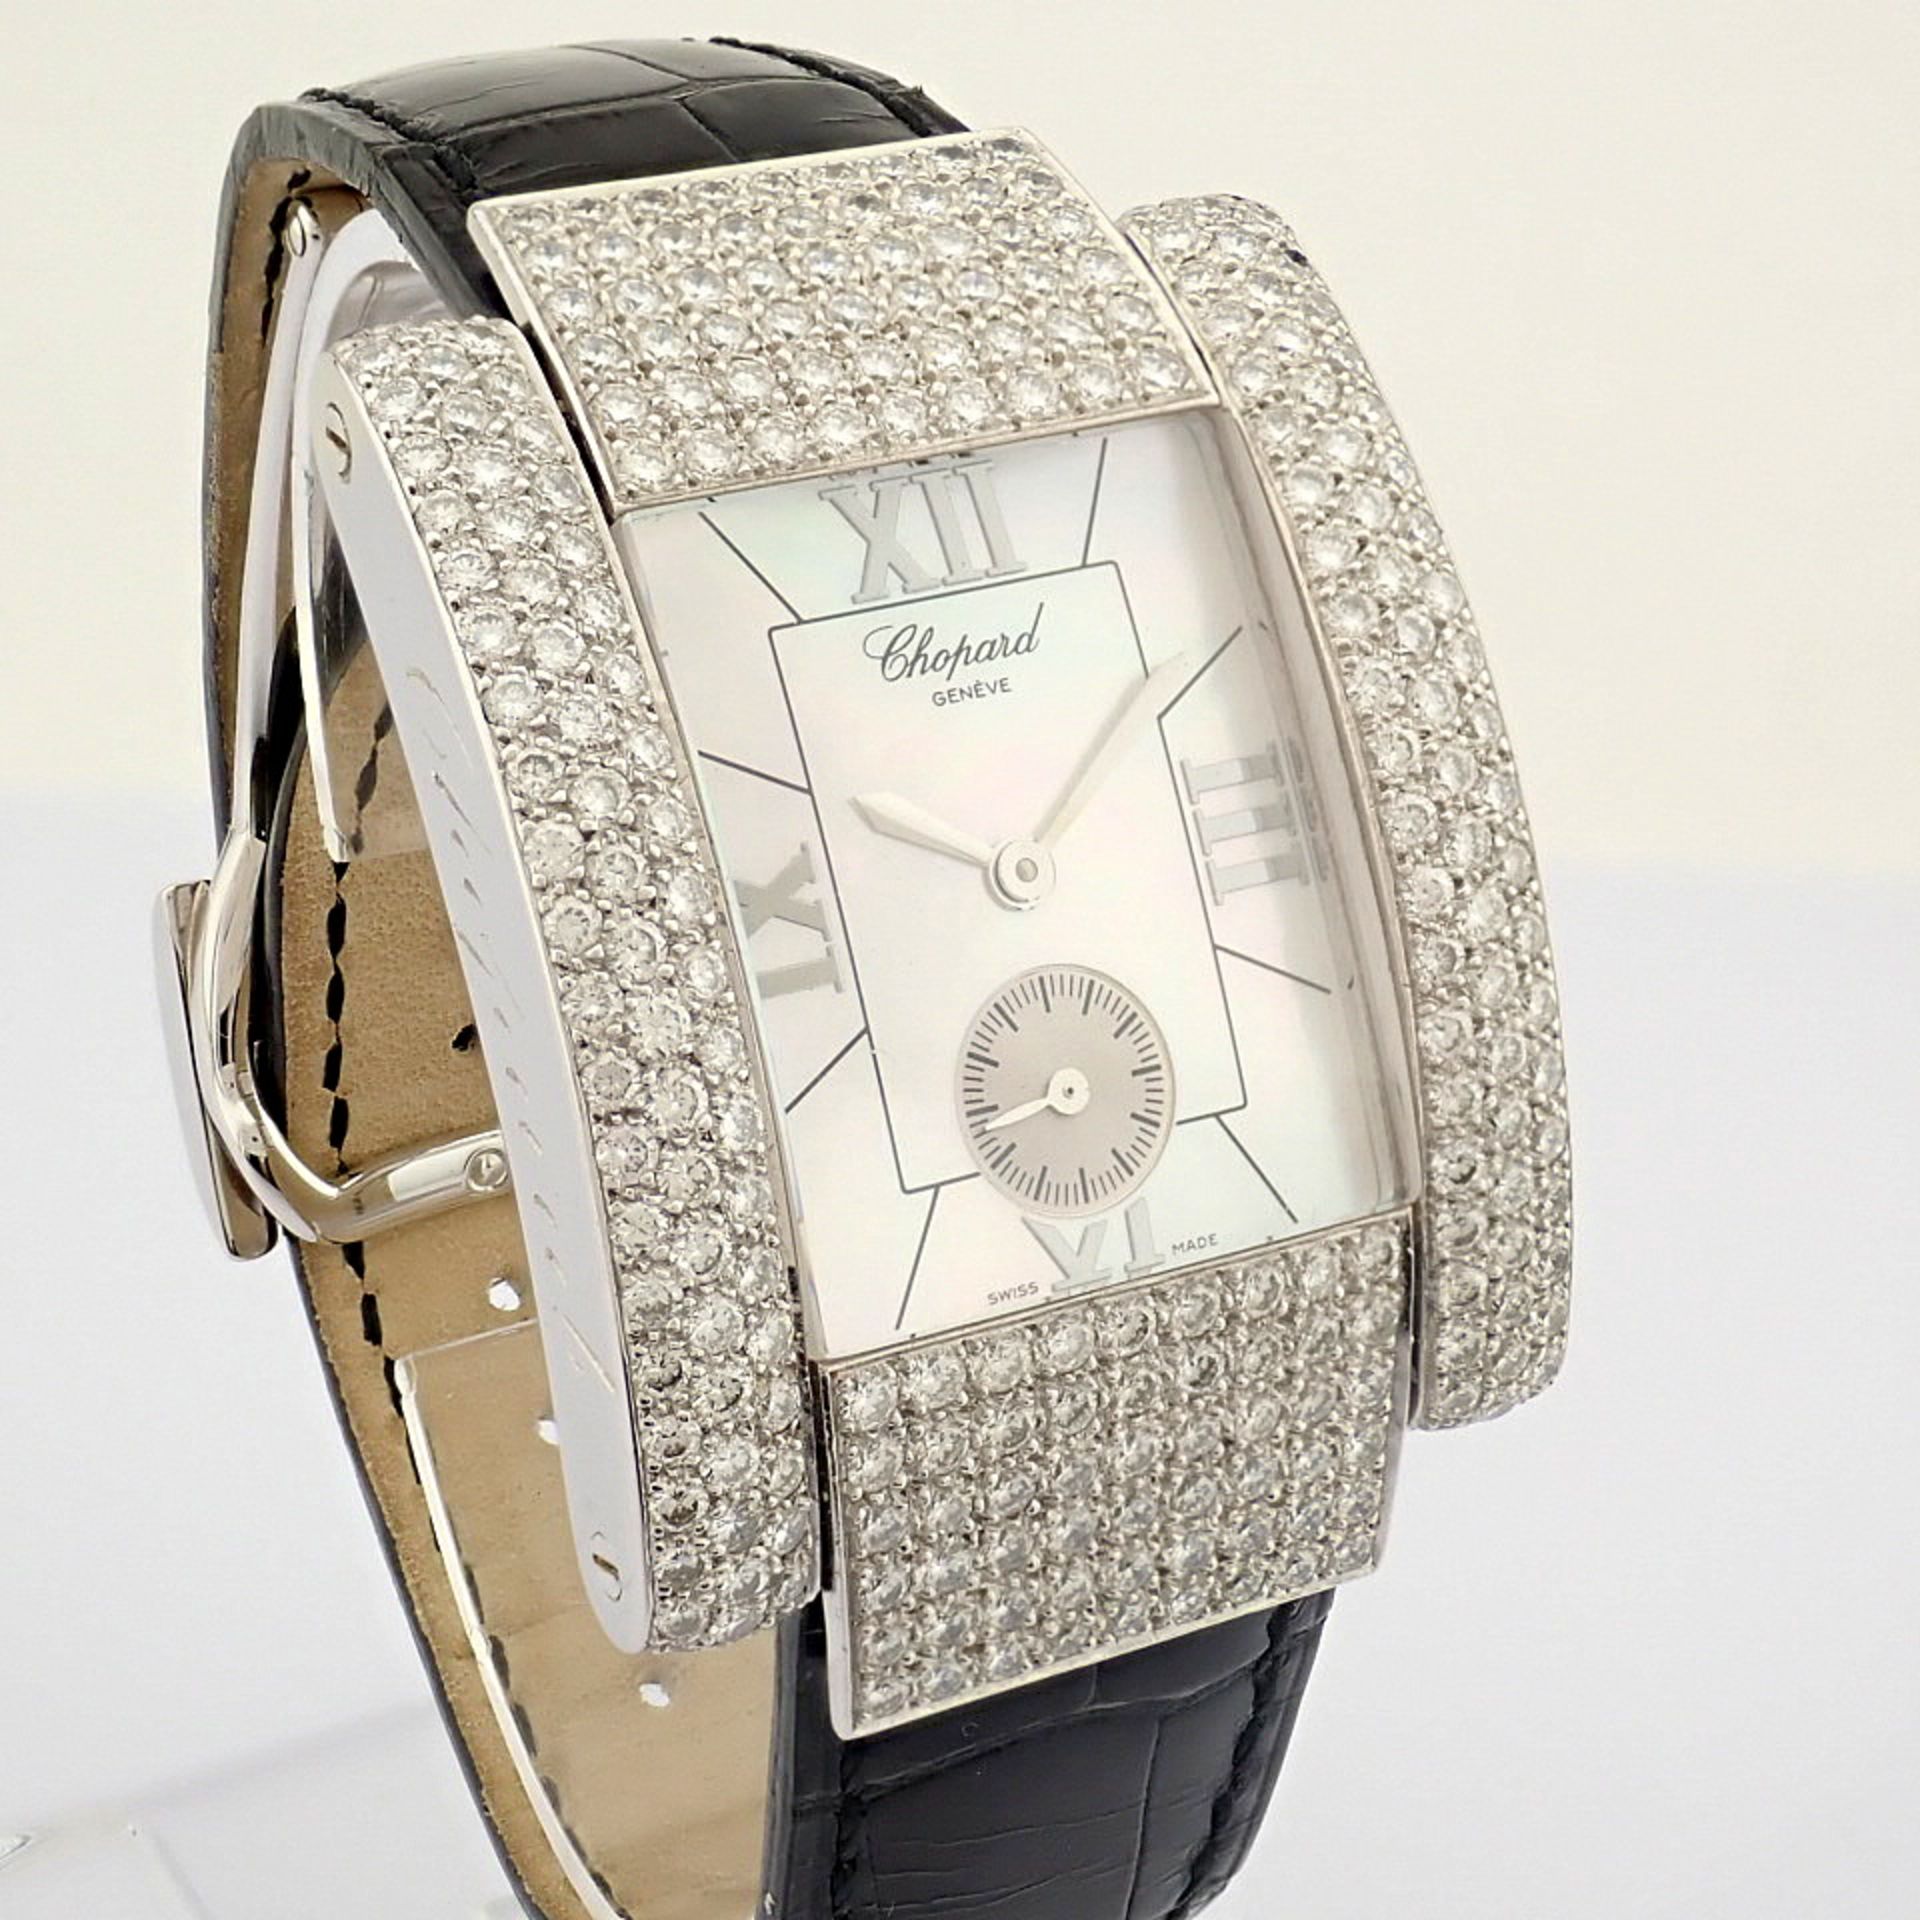 Chopard / La Strada - Lady's 18K White Gold Wrist Watch